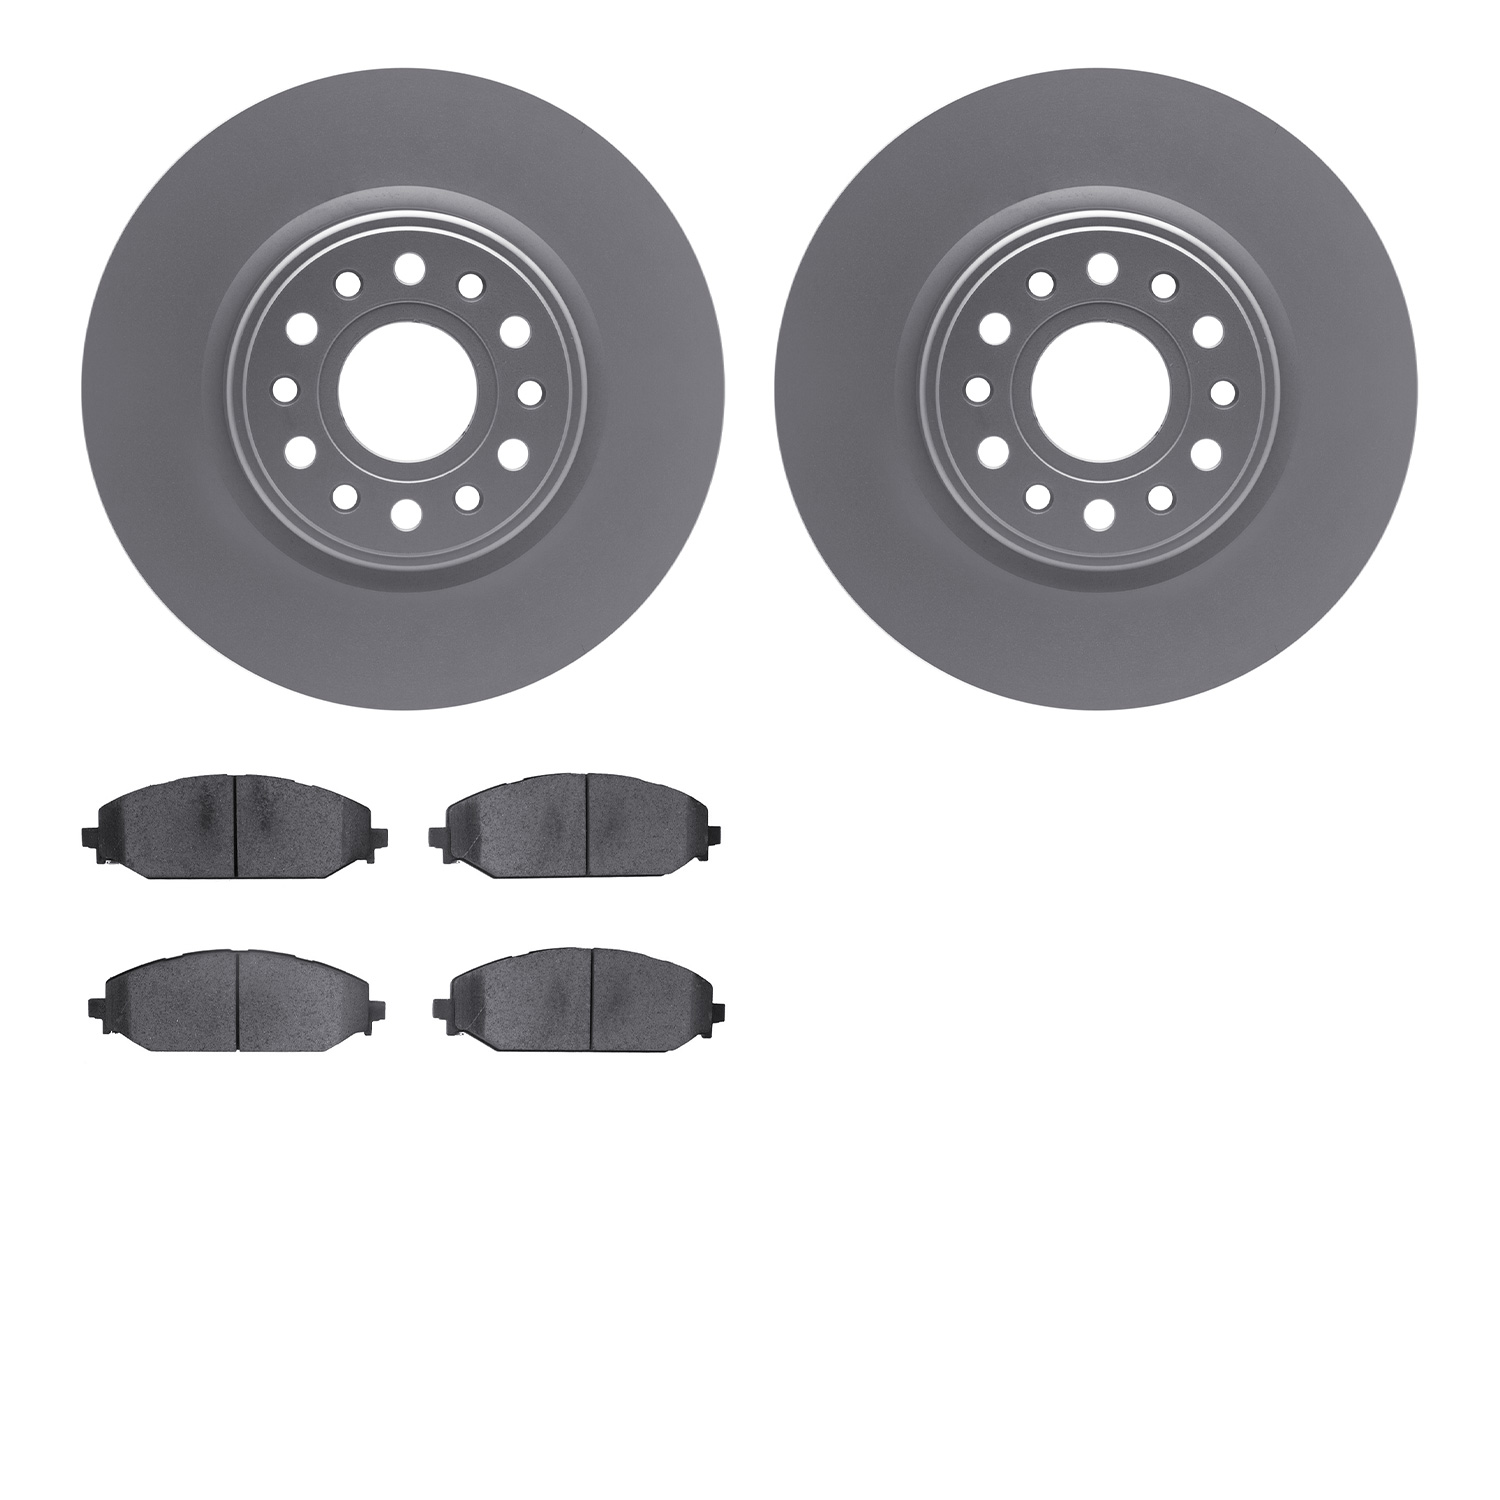 4402-40023 Geospec Brake Rotors with Ultimate-Duty Brake Pads Kit, Fits Select Mopar, Position: Front